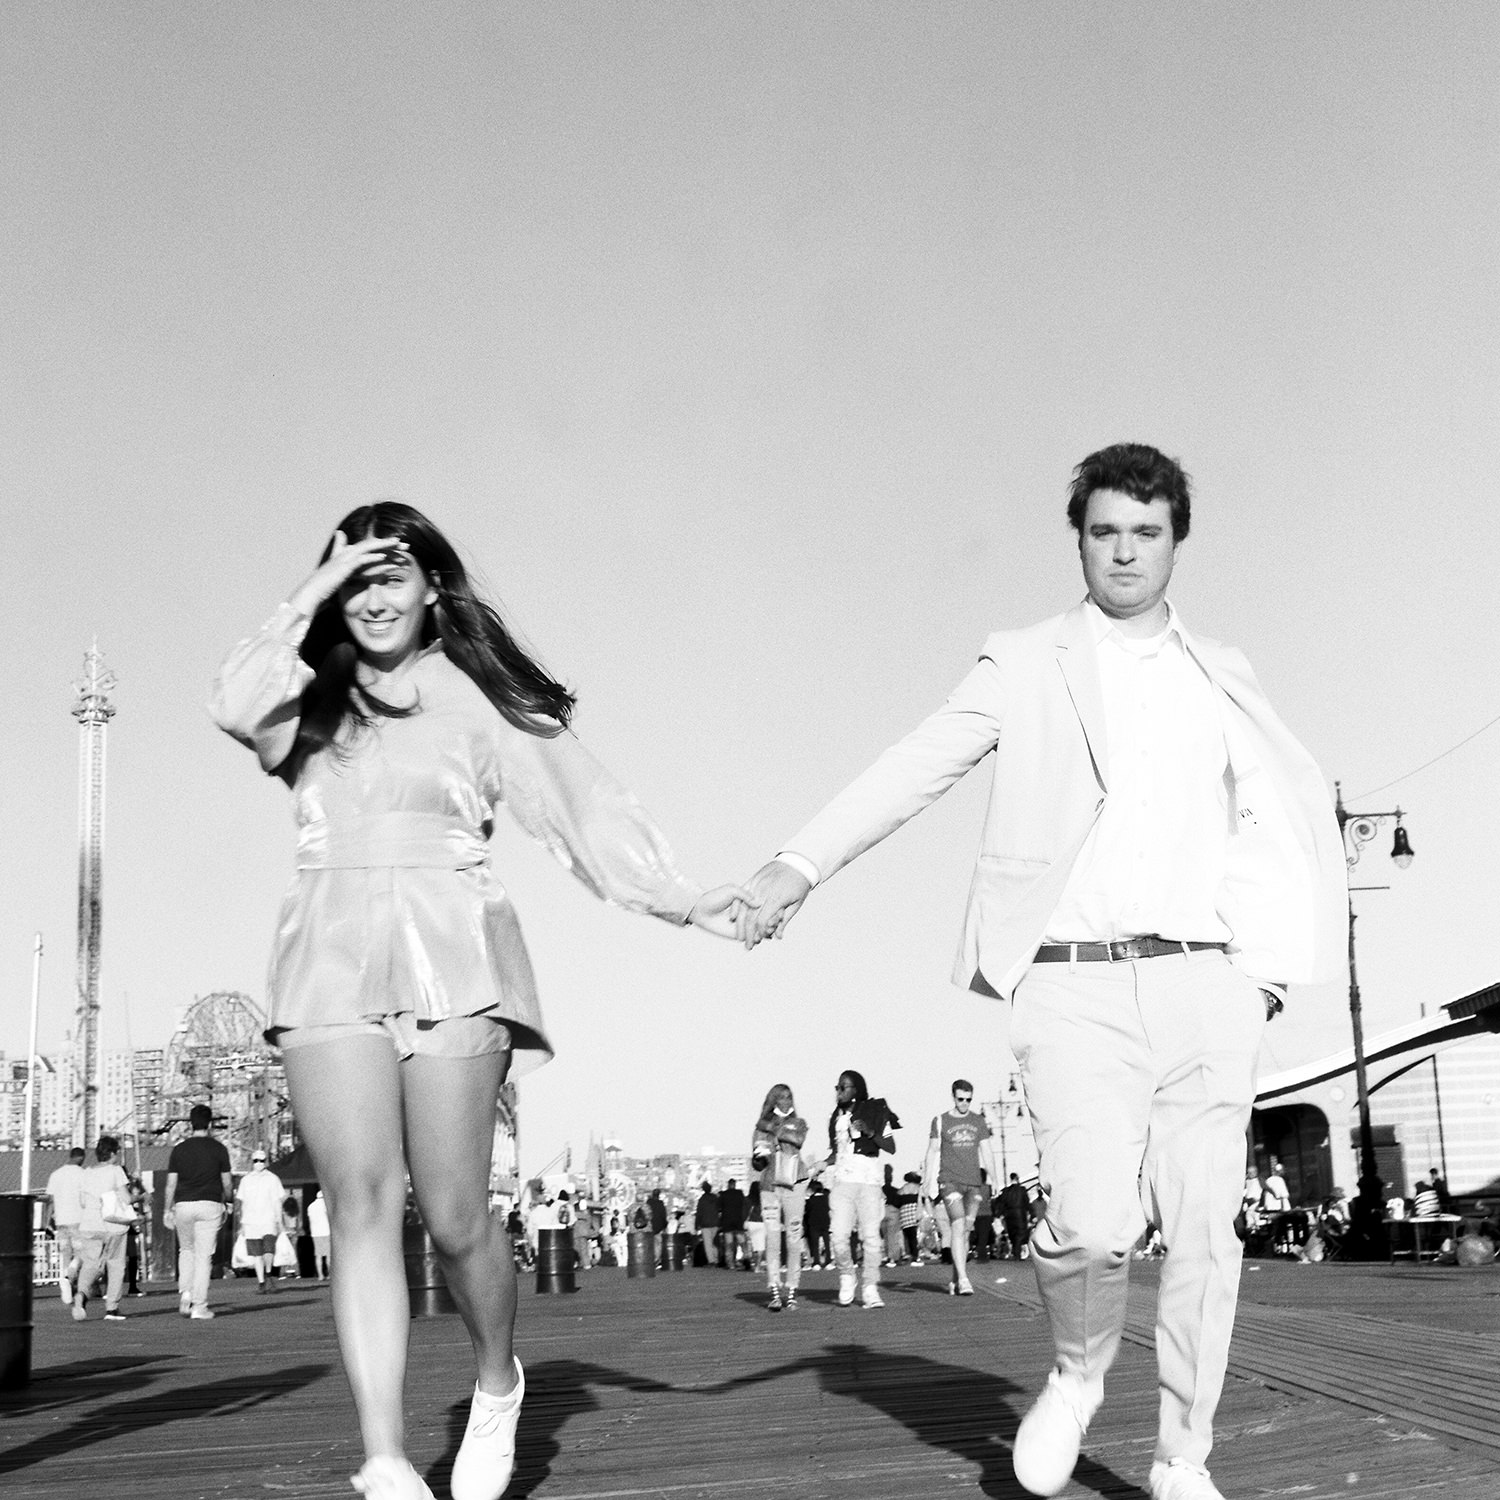 Black and White film photo Coney island engagement